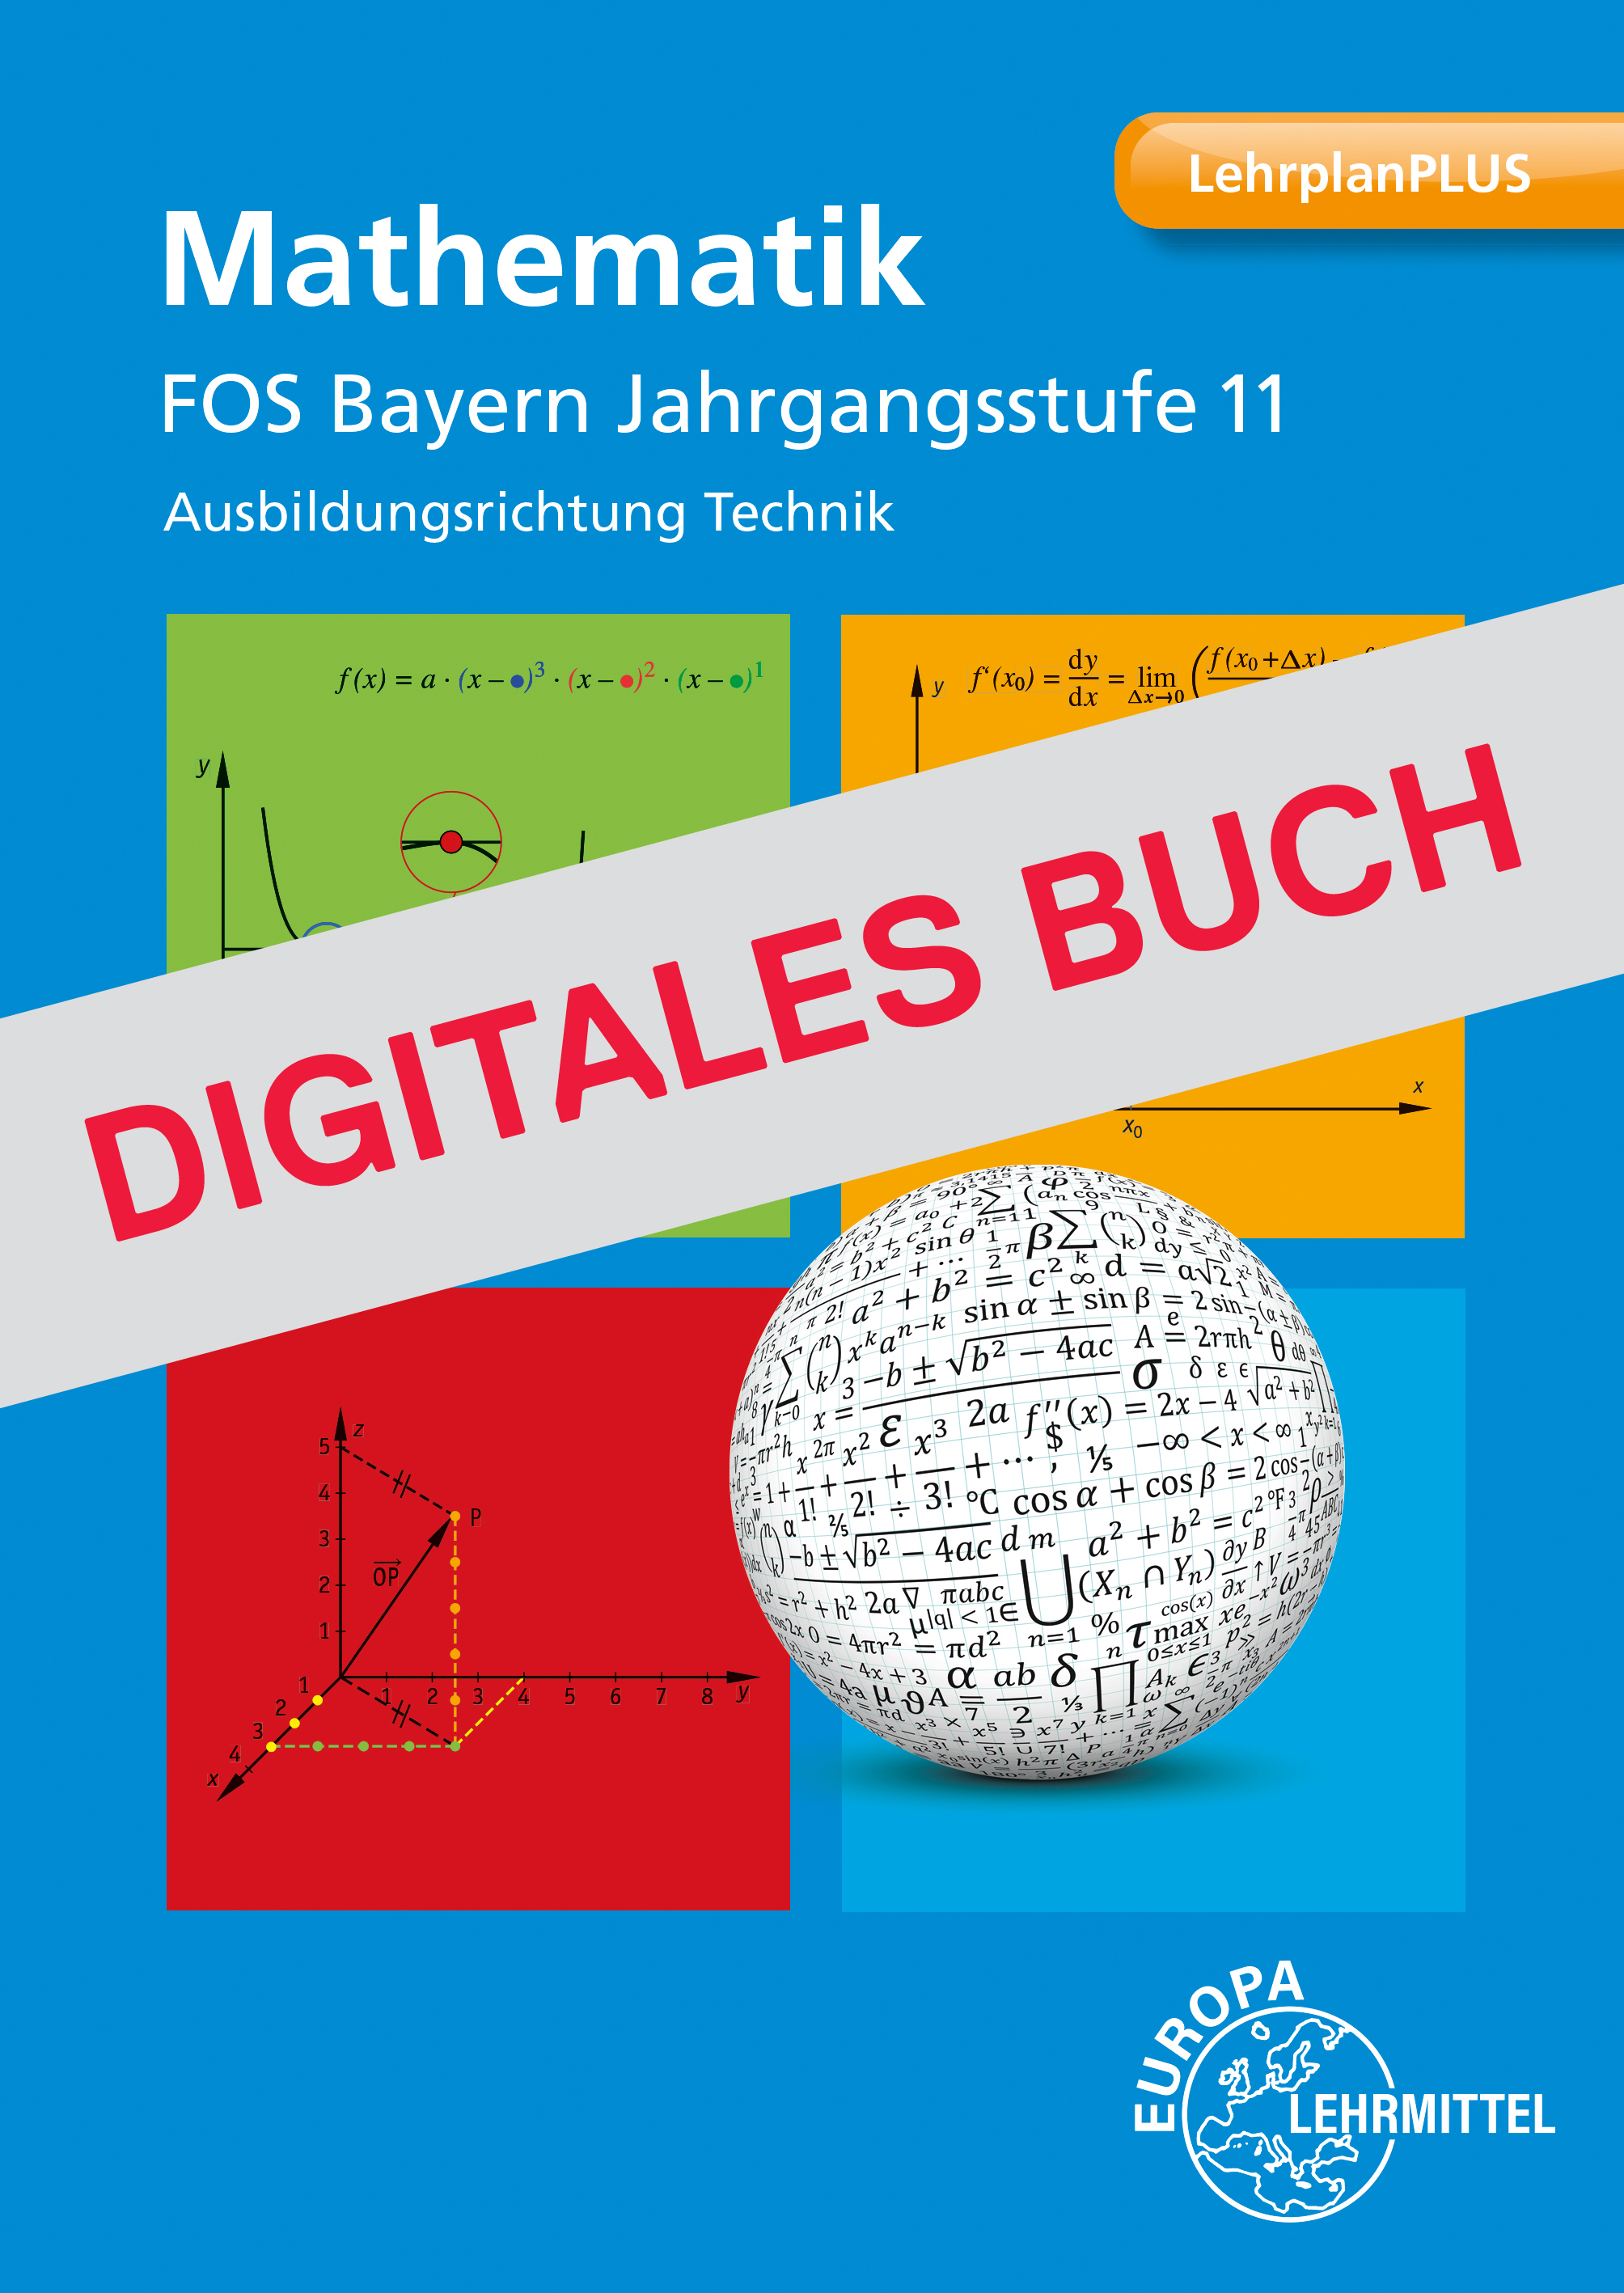 Mathematik FOS Bayern Jahrgst. 11 Ausbildungsrichtung Technik - Digitales Buch